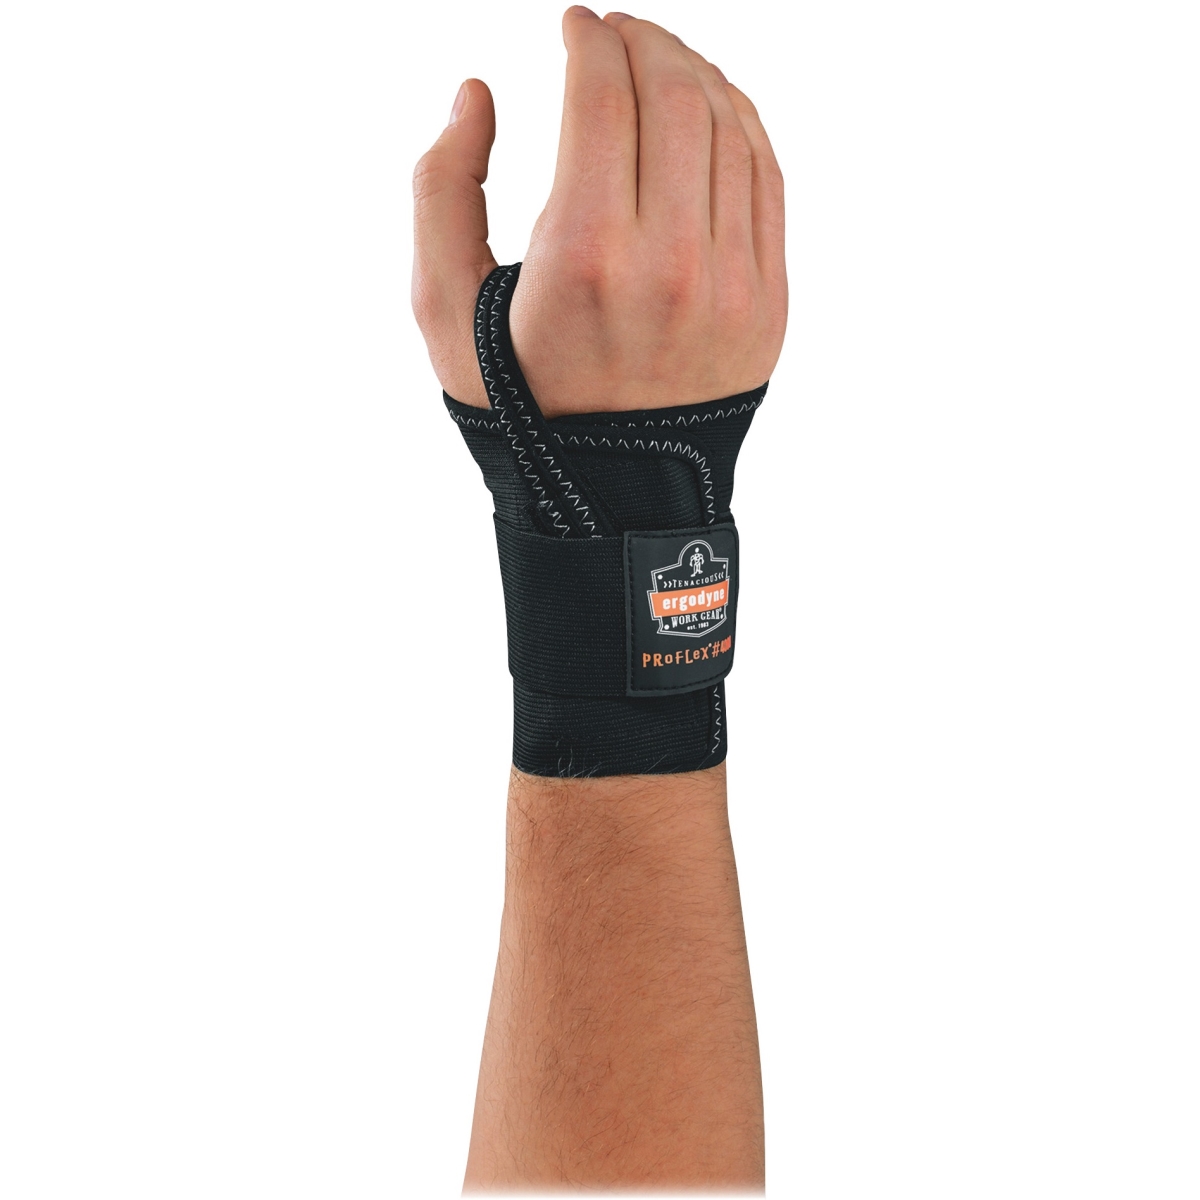 Ego70012 Single Strap Wrist Support - Black